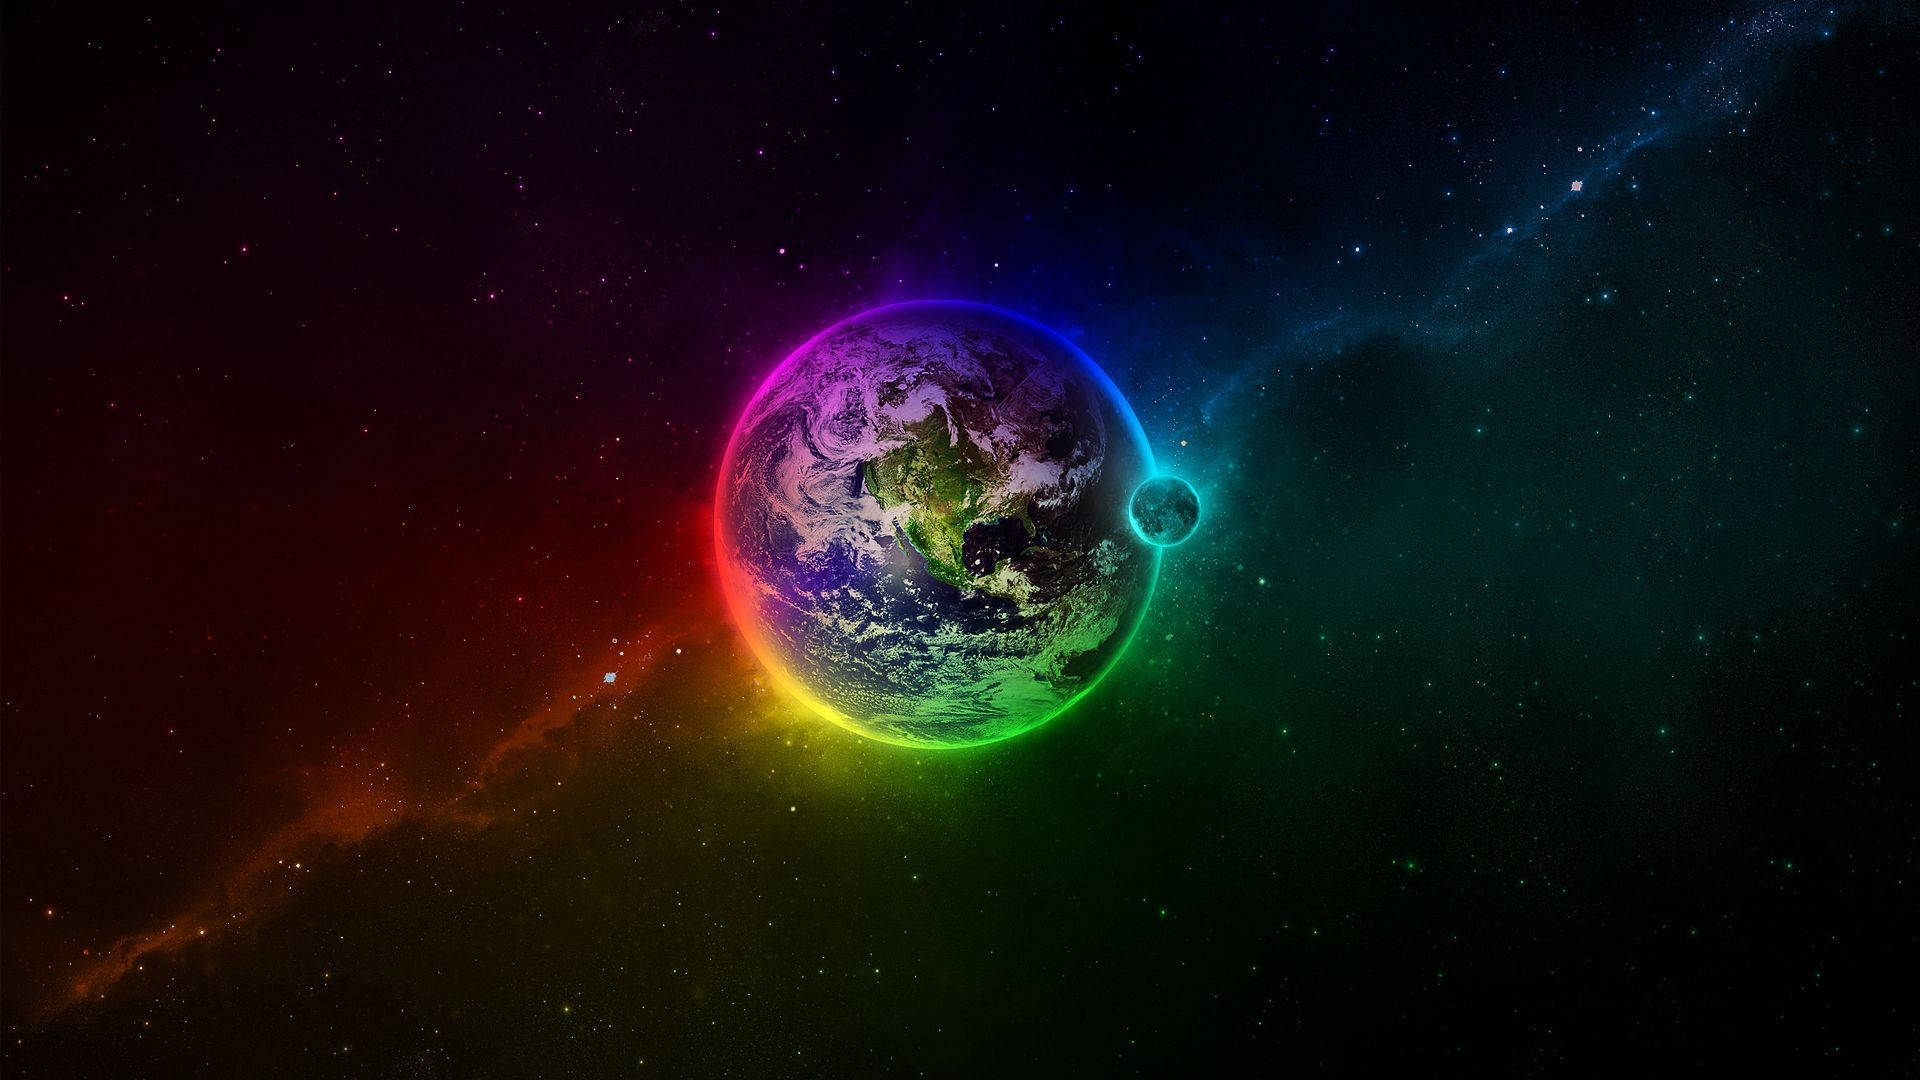 Amazing Vibrant Planet Earth Wallpaper